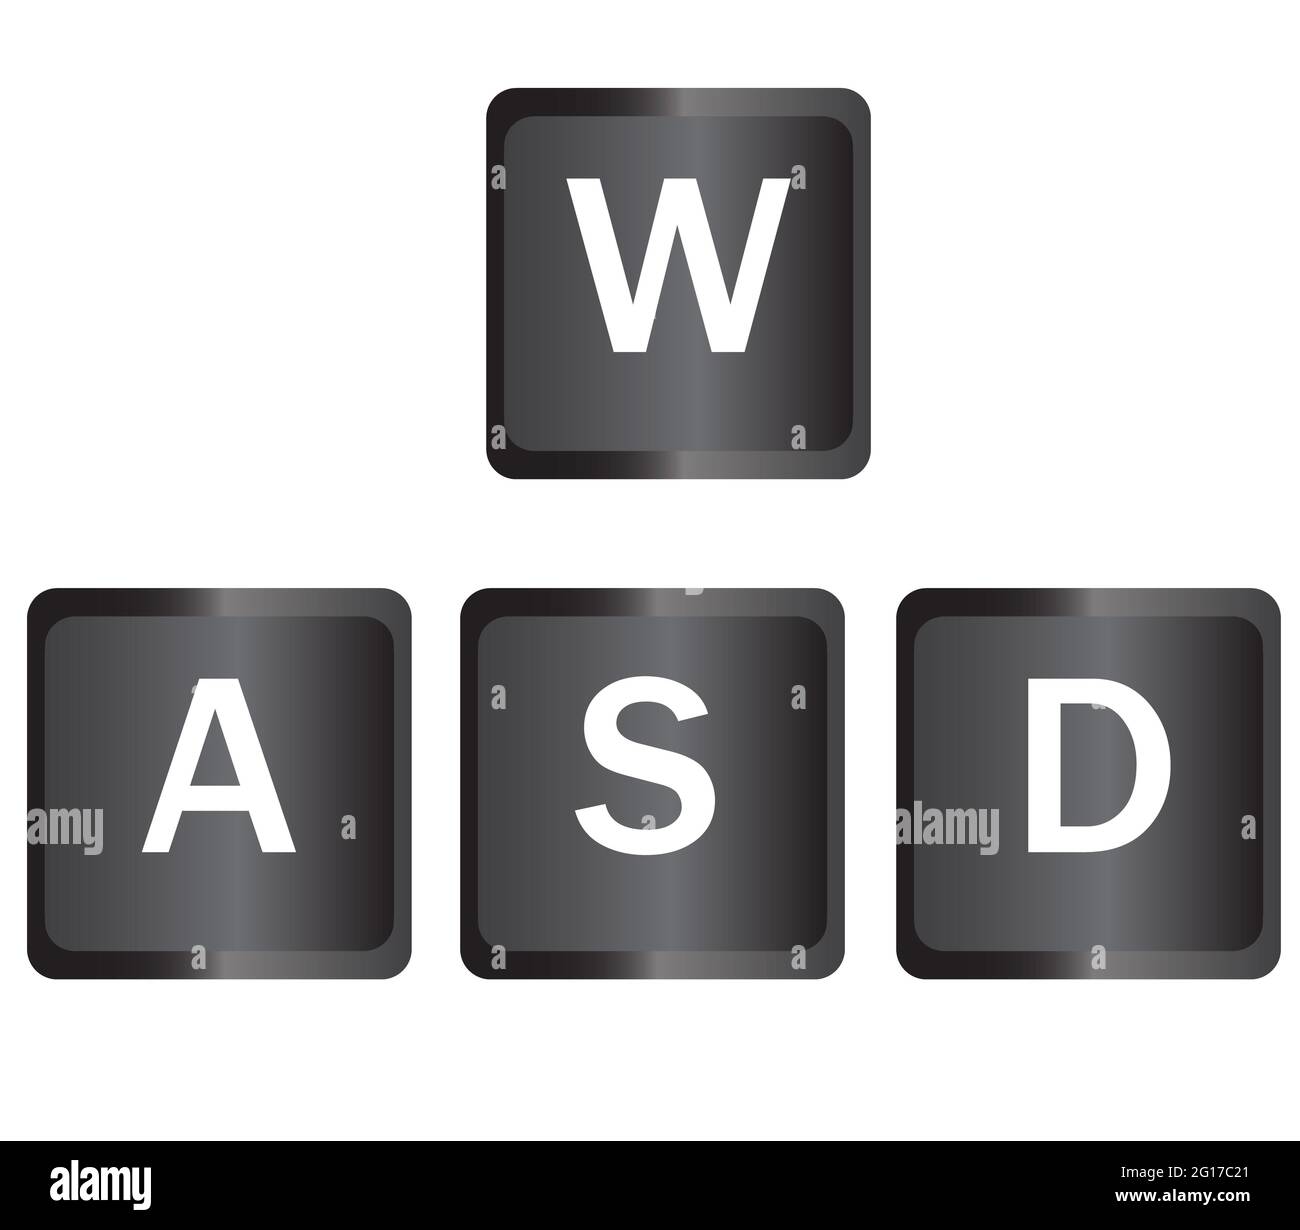 WASD keyboard gaming buttons. WASD computer keyboard sign. gaming and cybersport symbol. flat style. Stock Photo